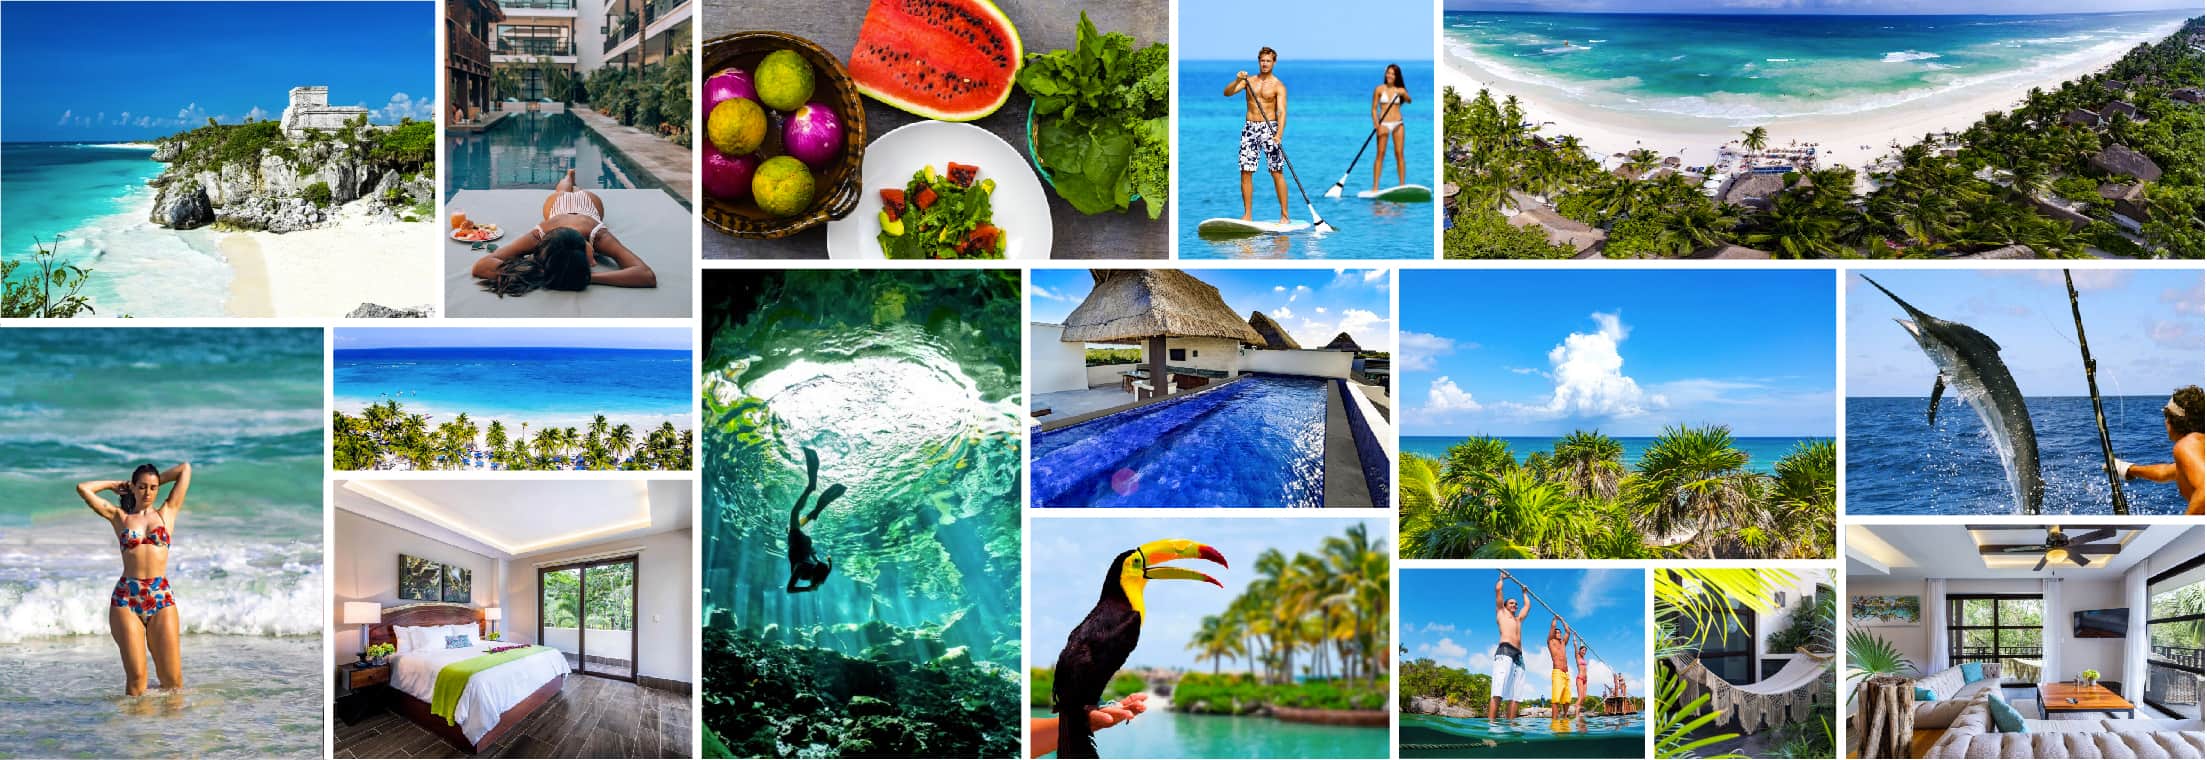 KASA Hotels - What to do in Riviera Maya